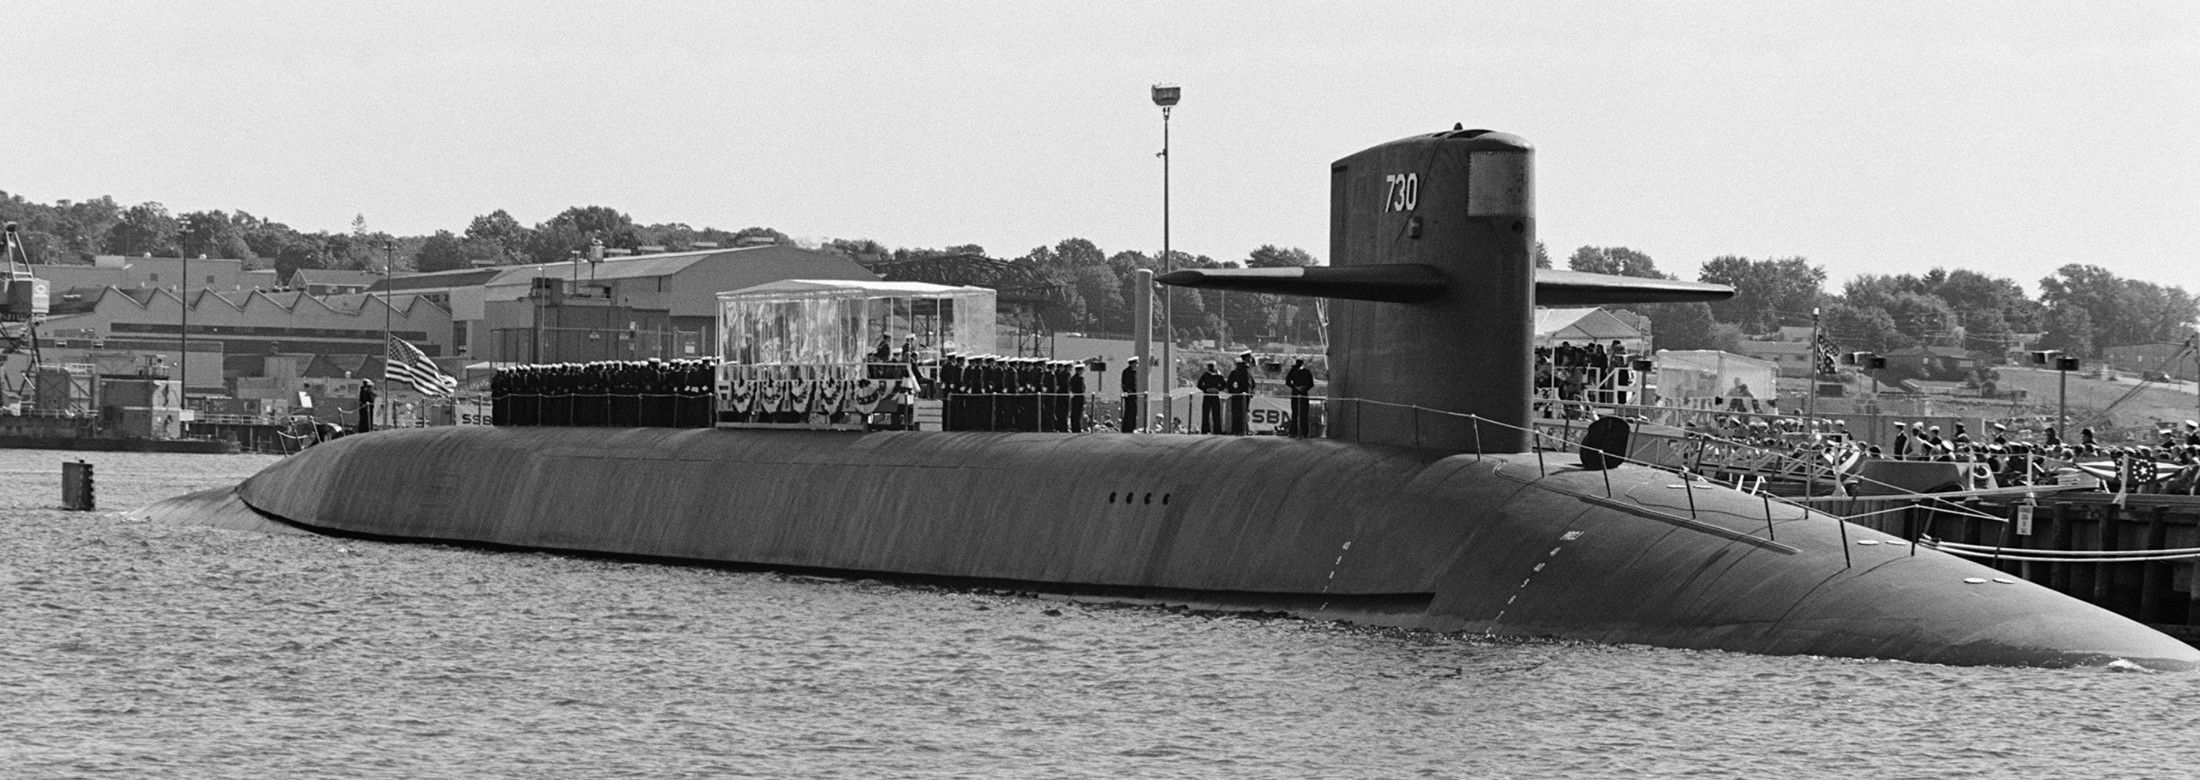 ssbn-730 uss henry m. jackson ohio class ballistic missile submarine 1984 25 commissioning ceremony groton connecticut